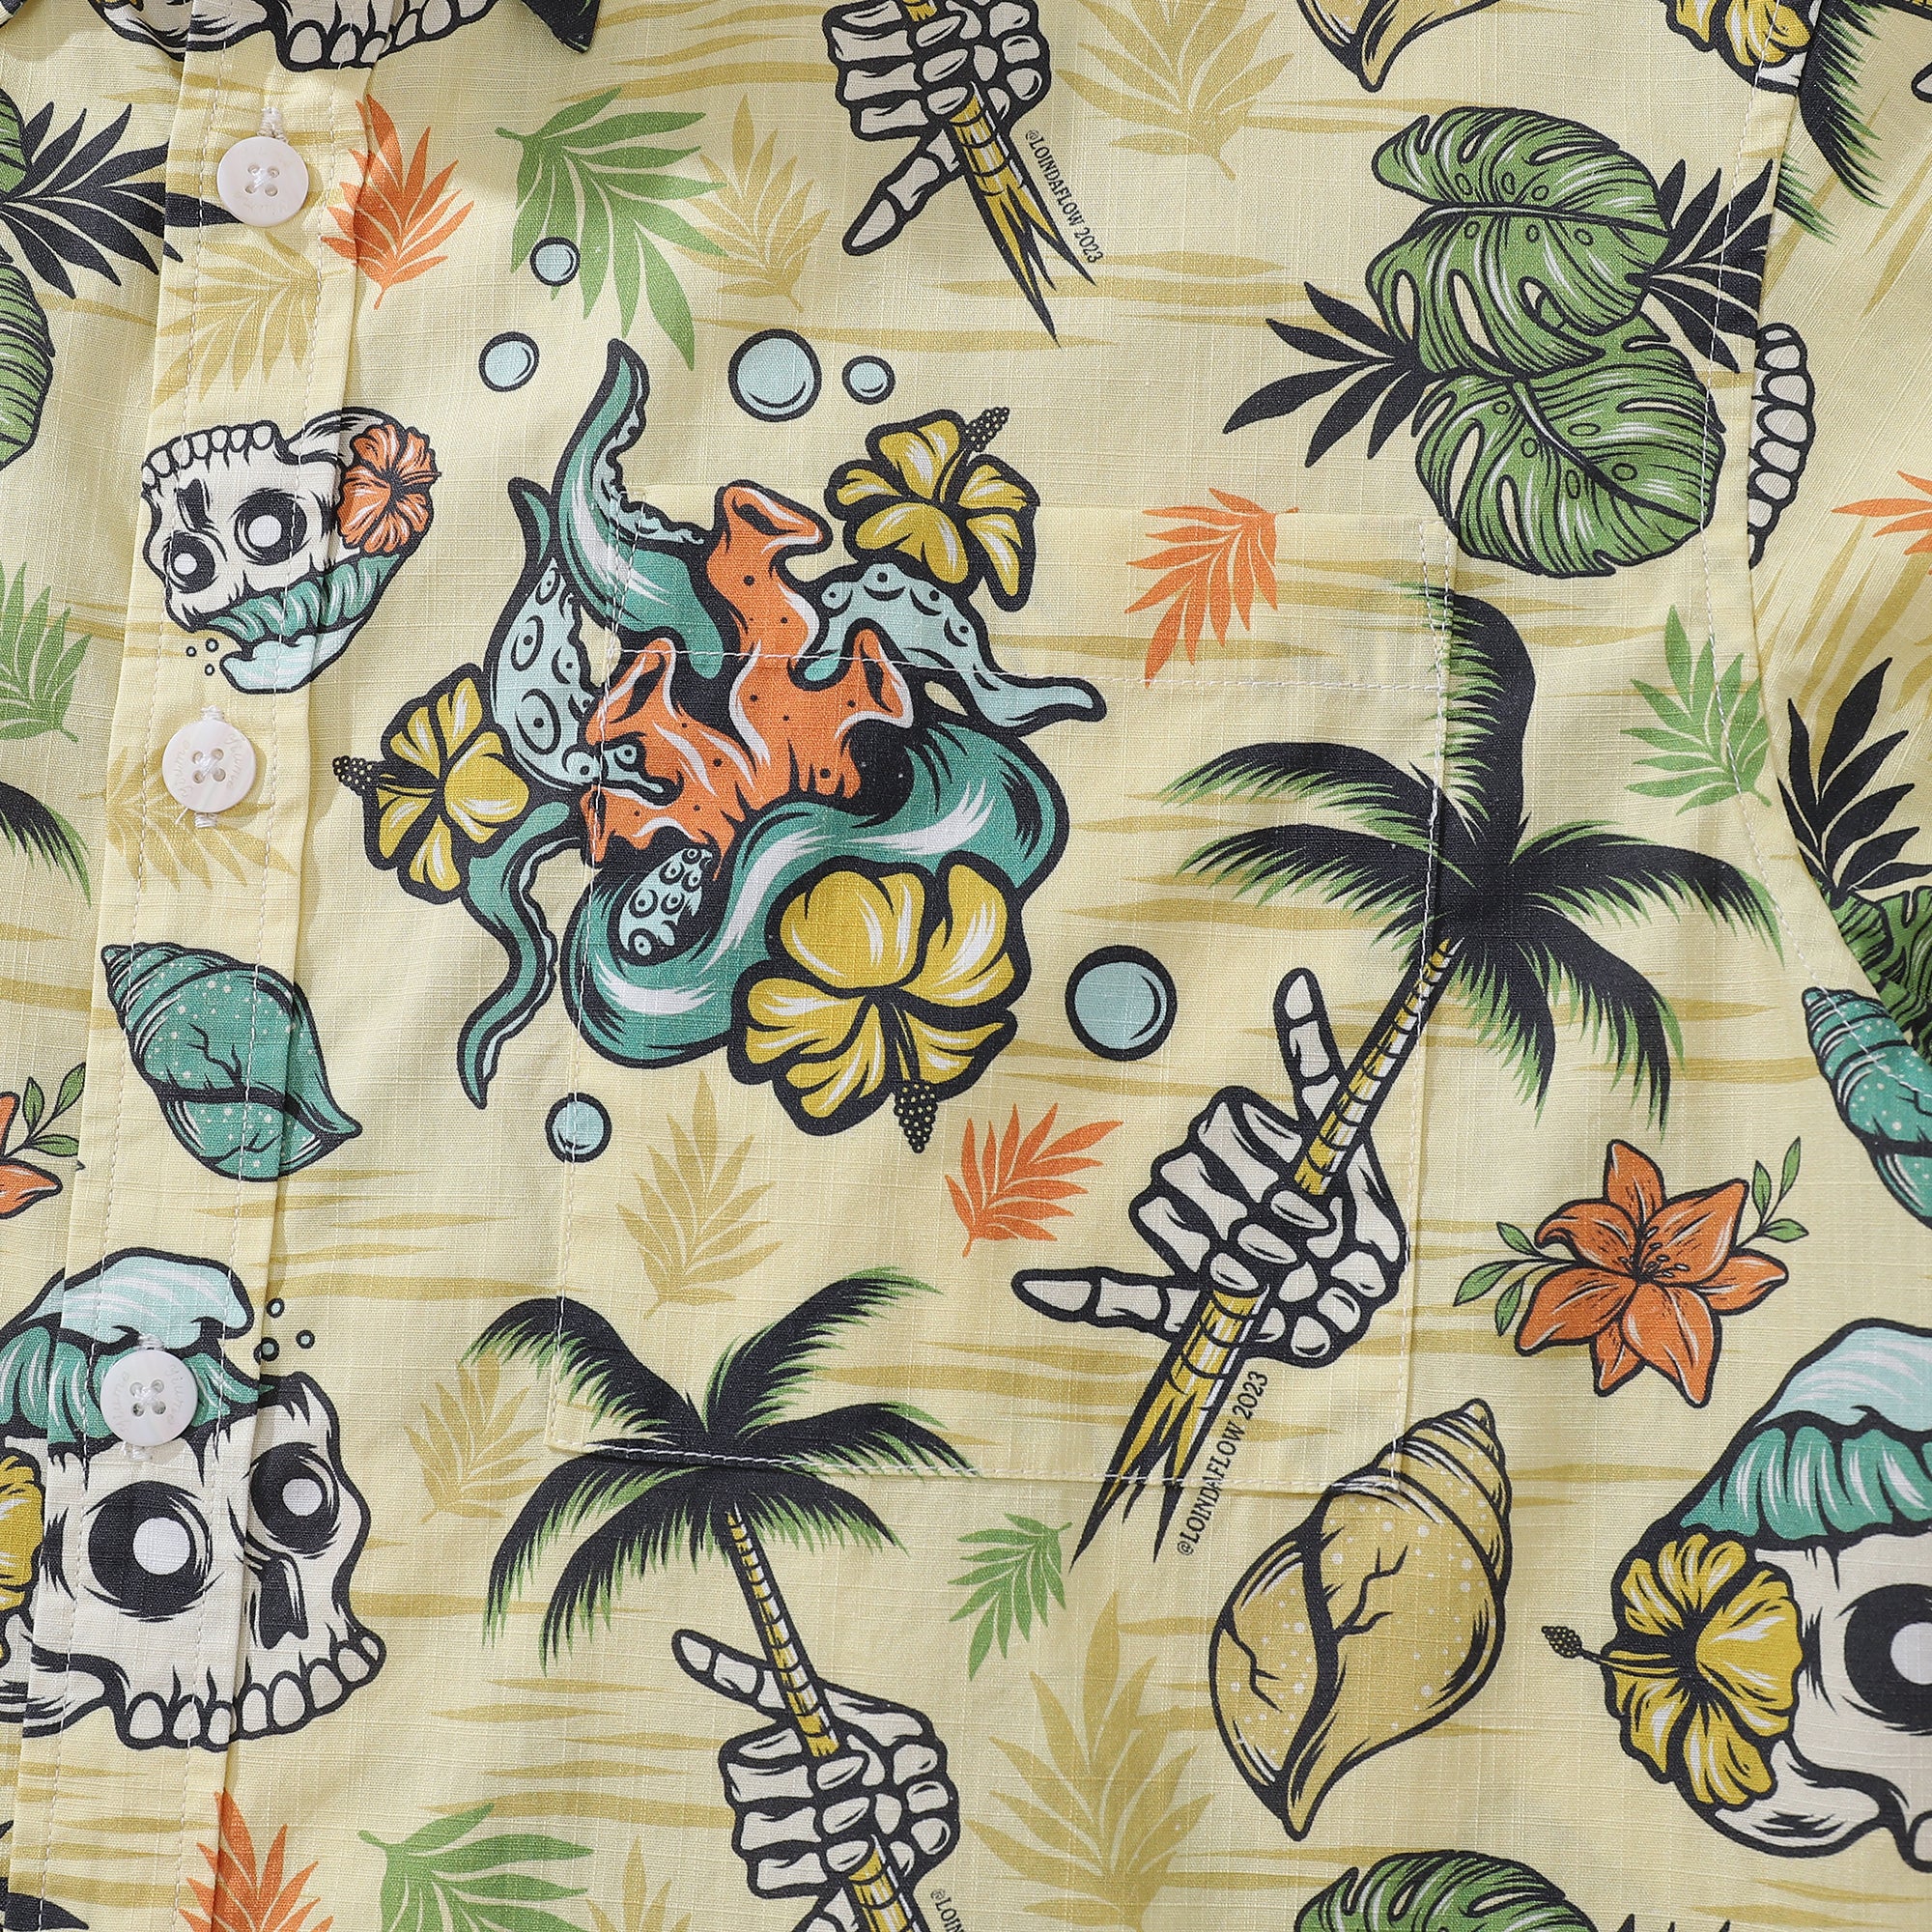 Herren Hawaiihemd Tropical Wilderness Skull 1990er Vintage Button-Down Kurzarm Aloha Hemd